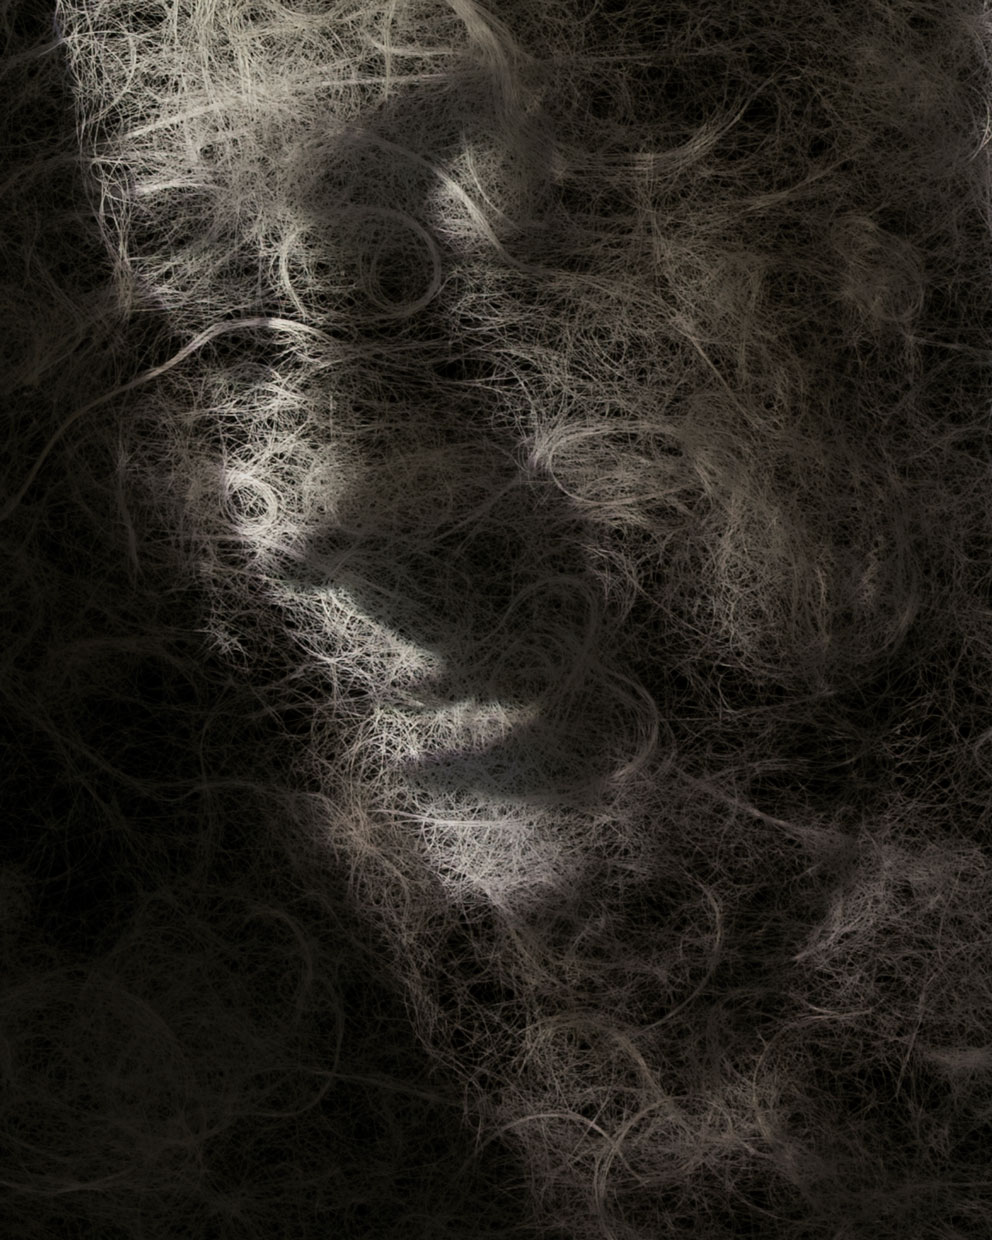    Eva   , 2014  , Chromogenic print, 35 x 28 cm  